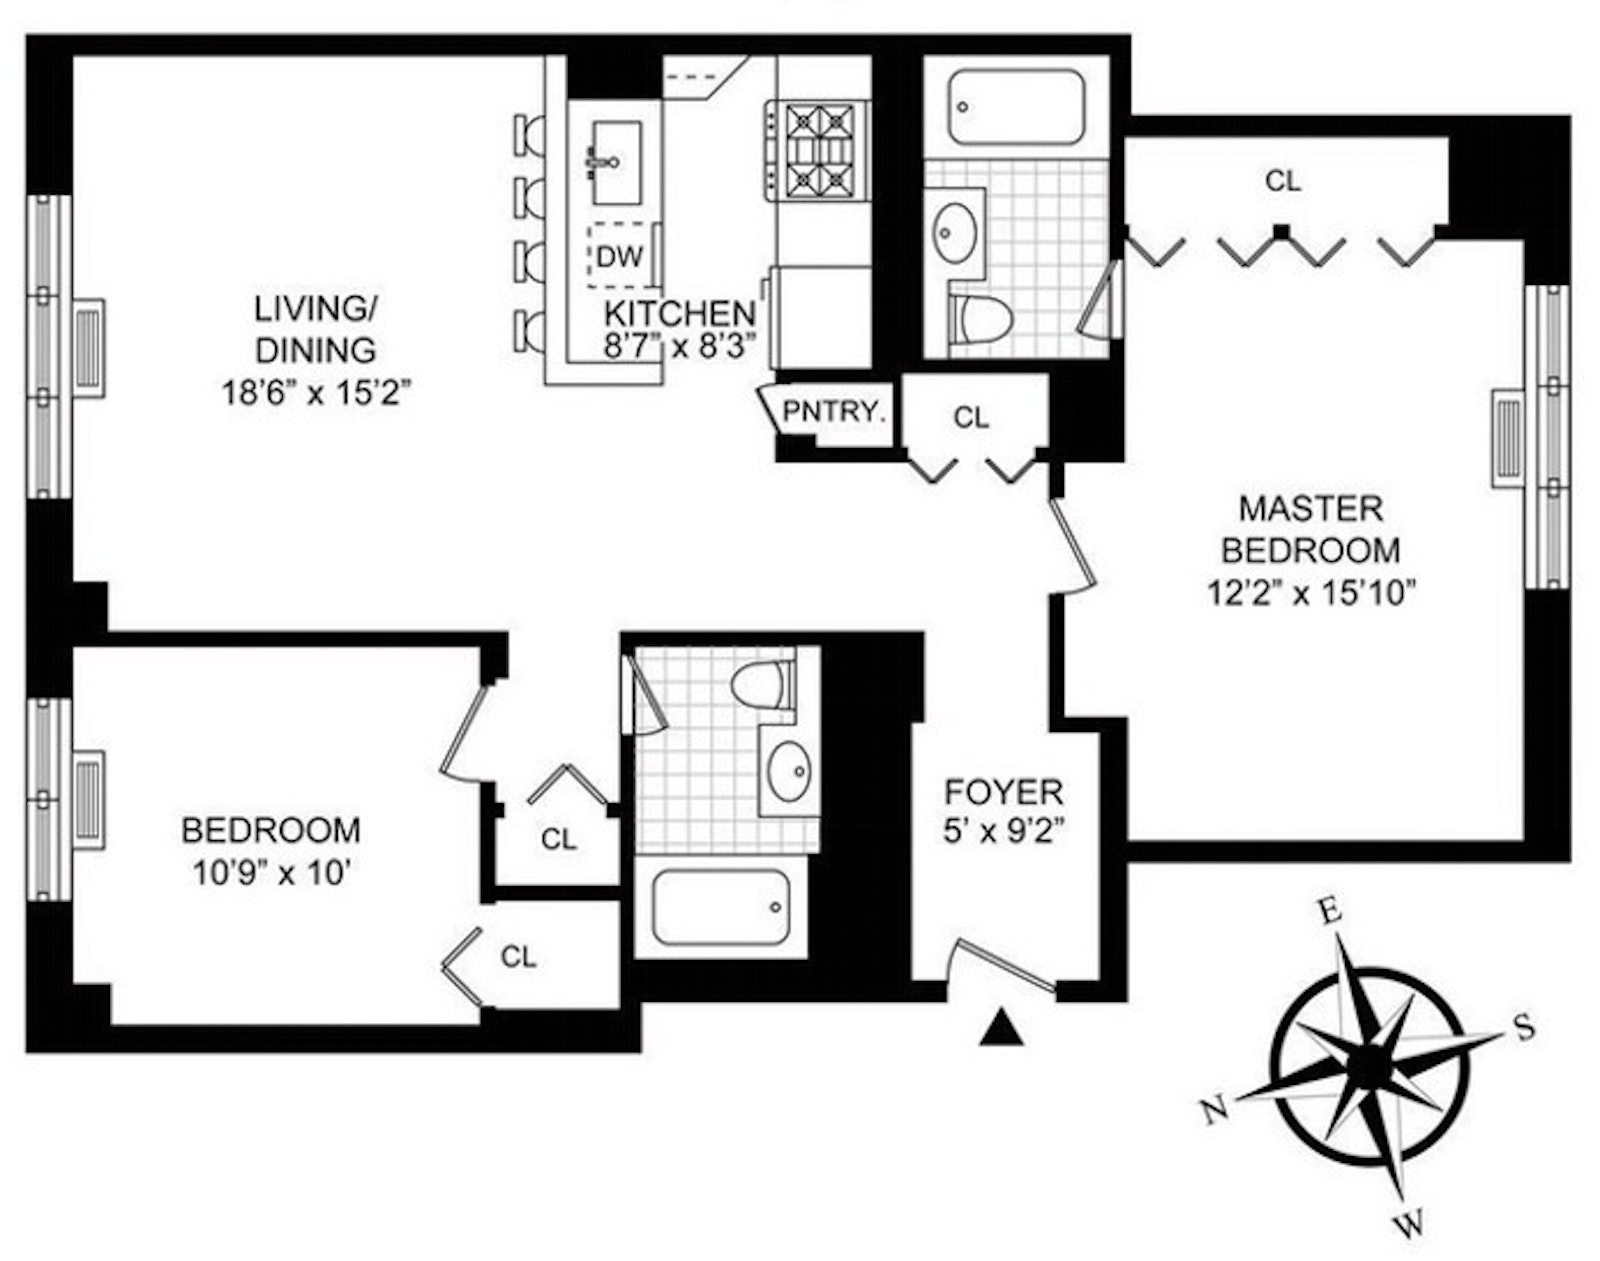 Floorplan for 53 Boerum Place